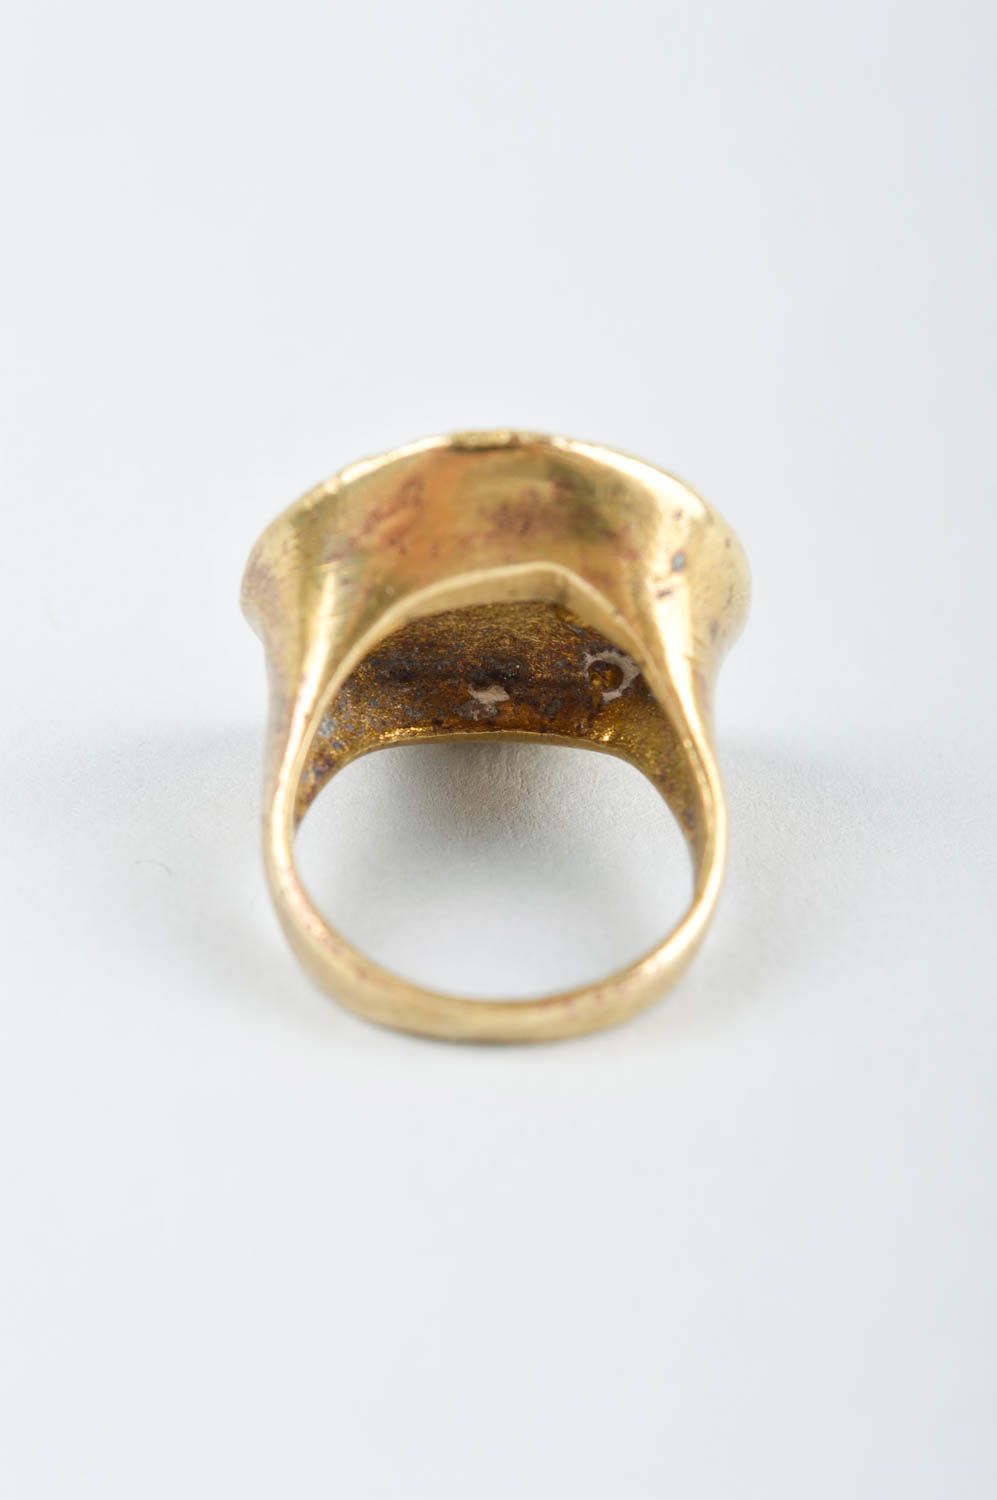 Unusual handmade metal ring exclusive ring for girls metal jewelry designs photo 4